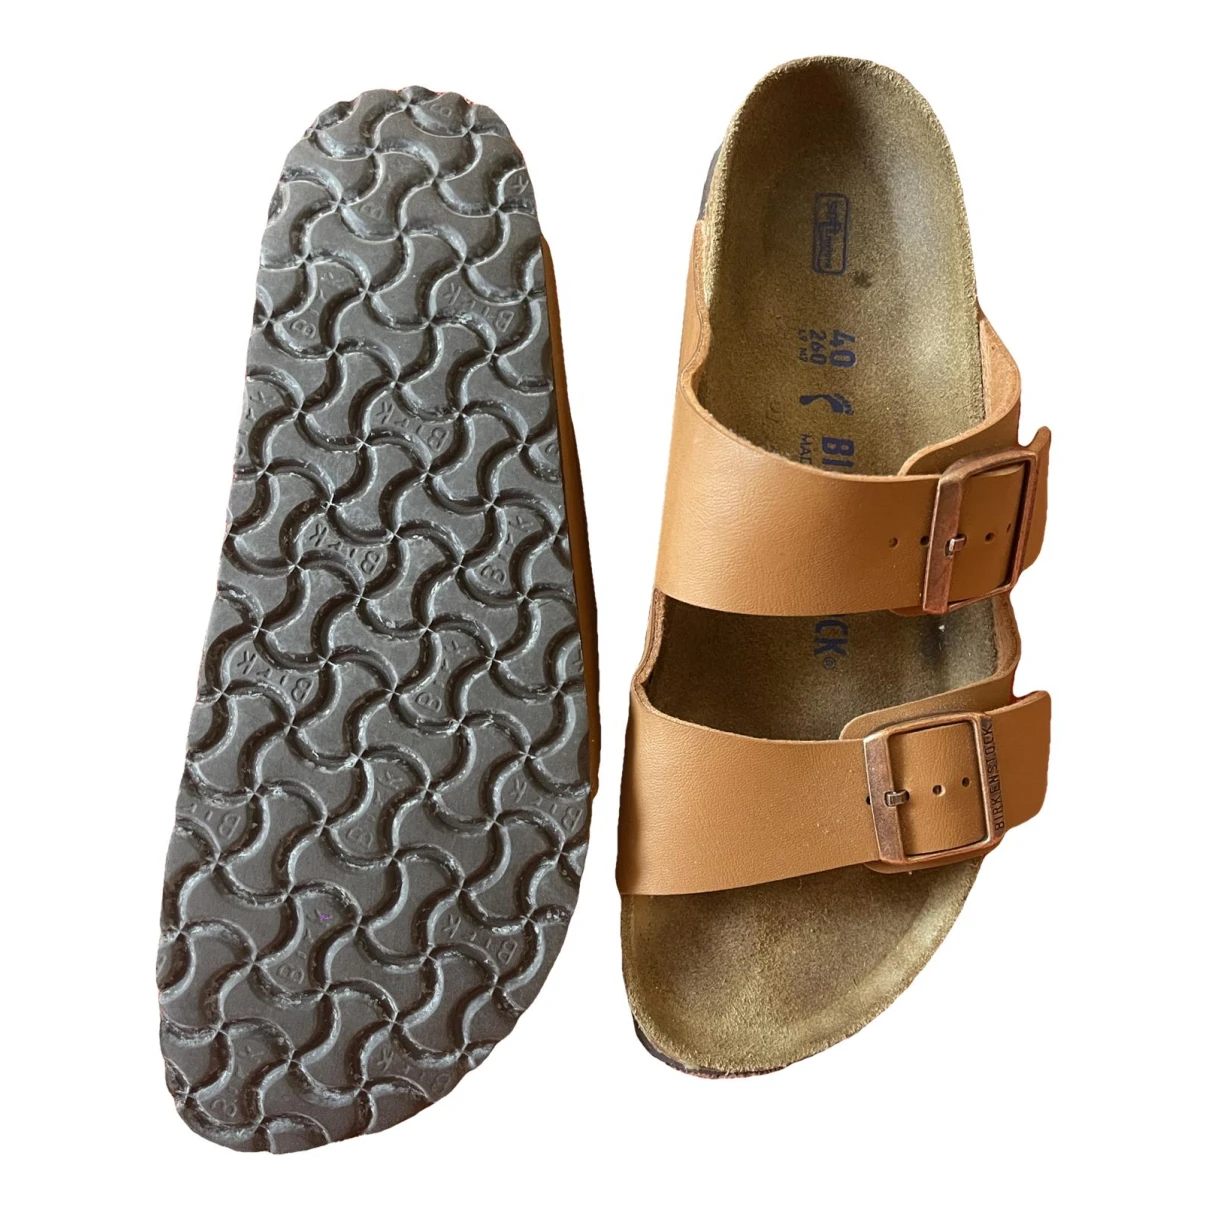 Pre-owned Birkenstock Leather Sandal In Camel